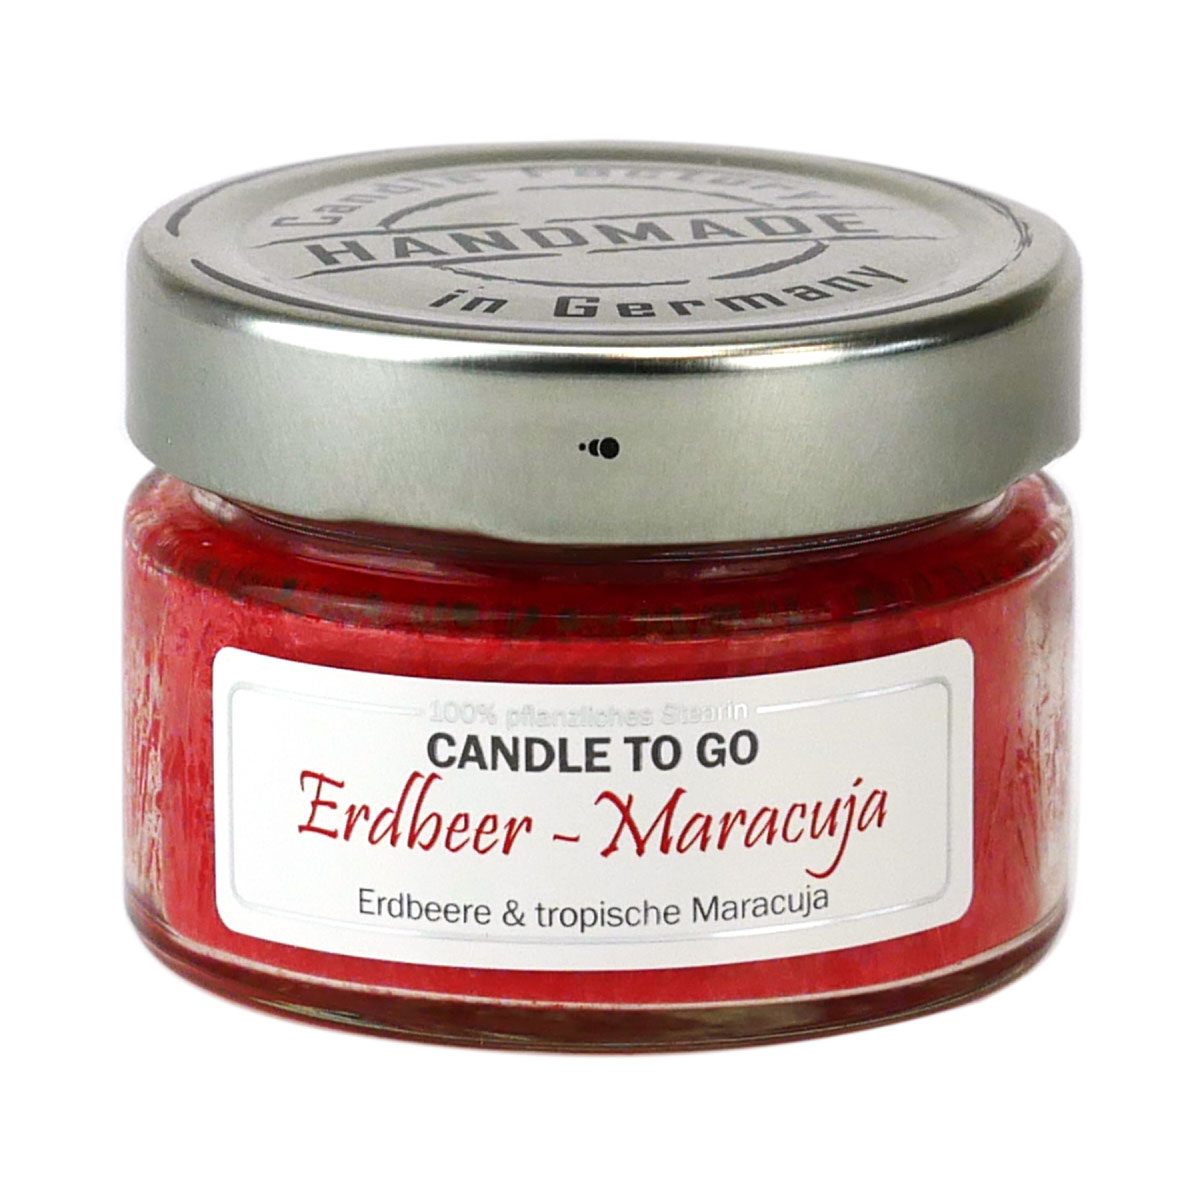 Erdbeer Maracuja - Candle to Go die Duftkerze für unterwegs